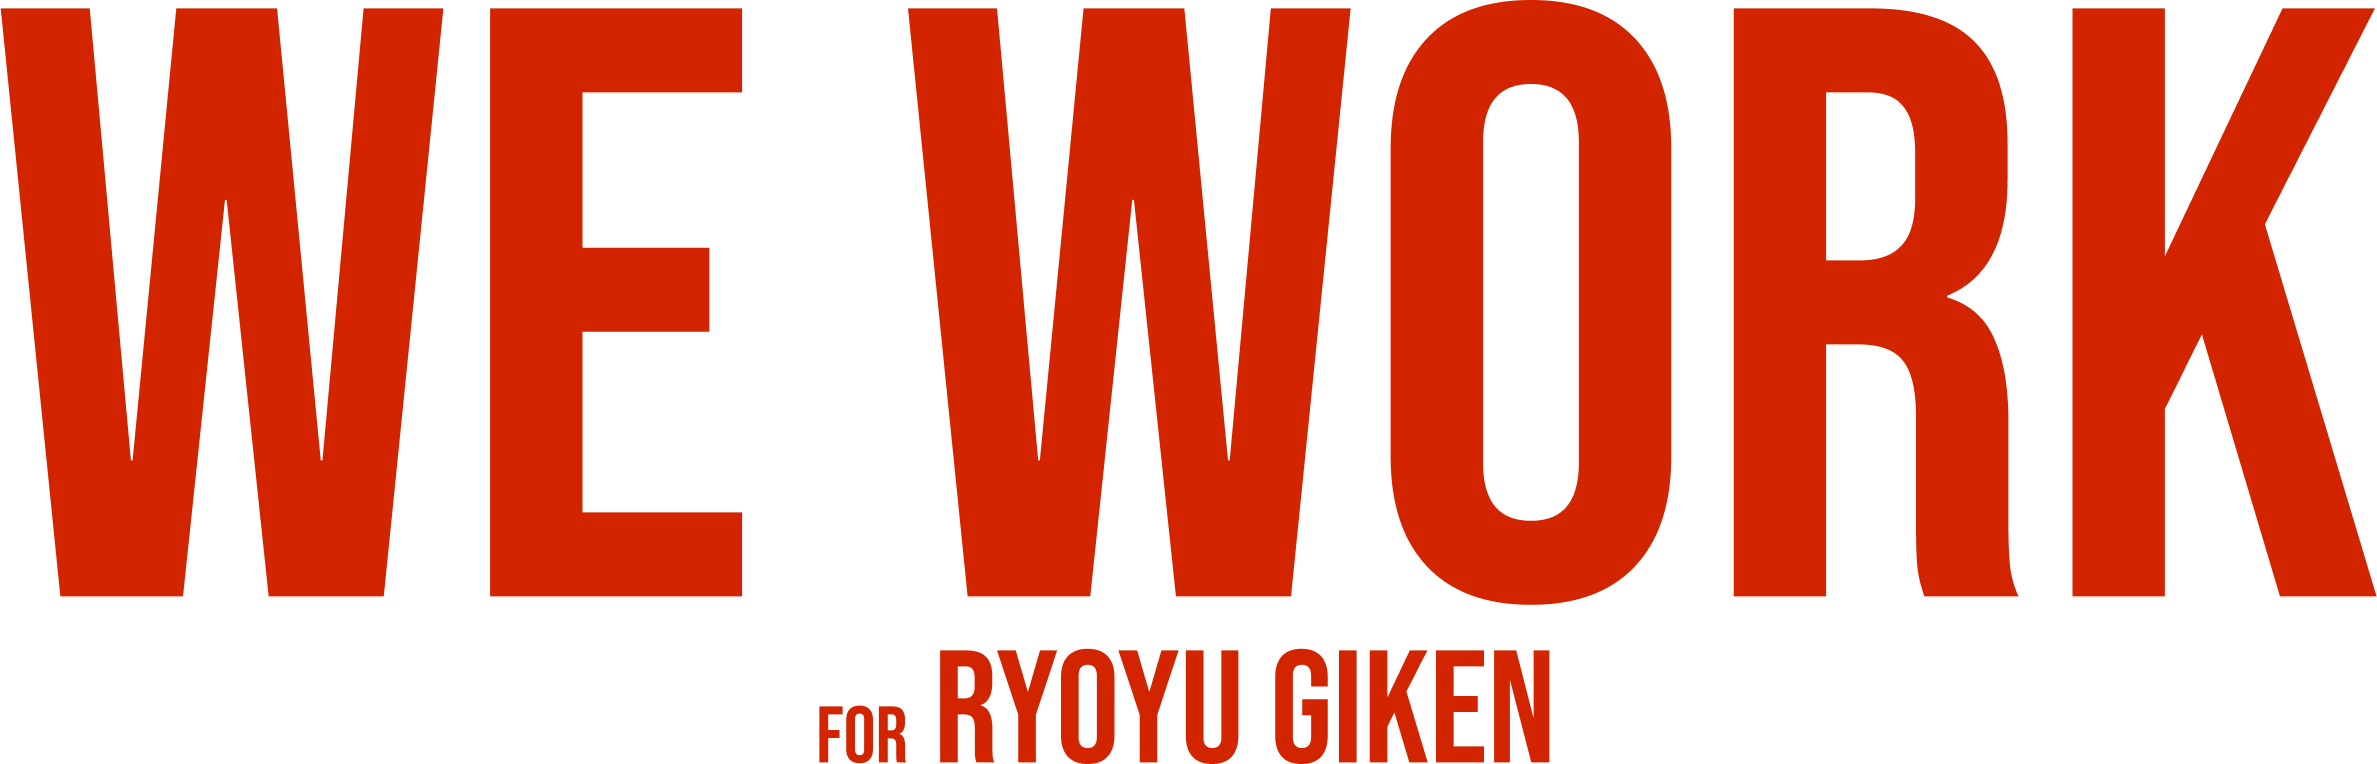 We work for Ryoyu Giken